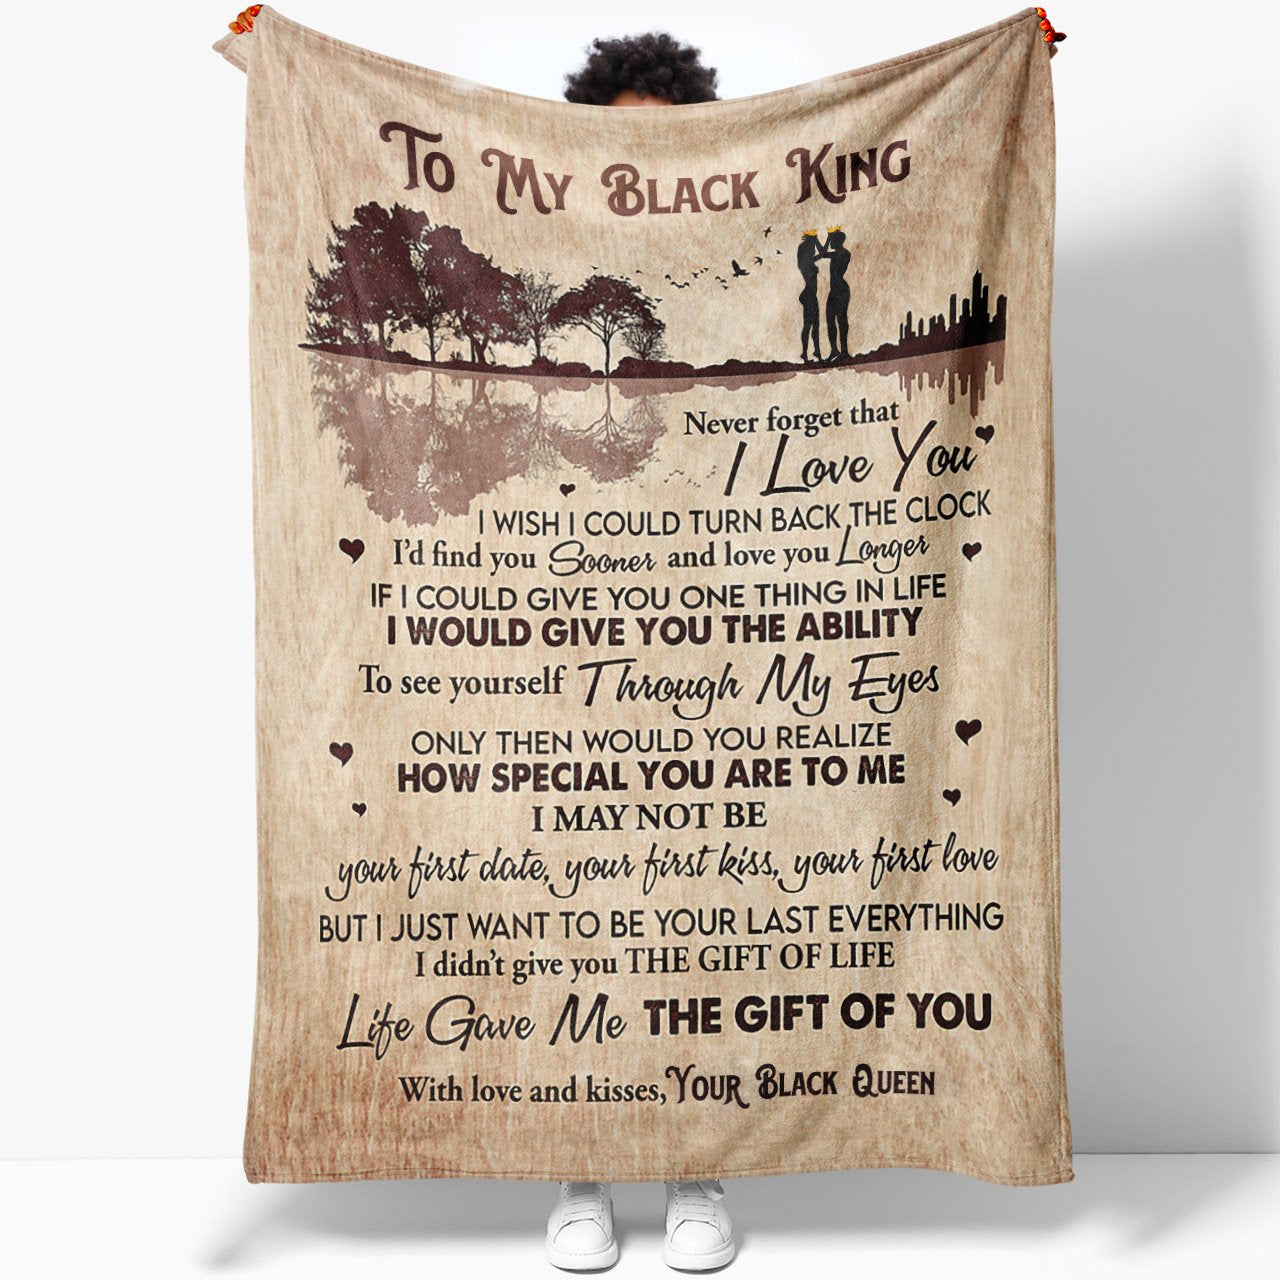 Blanket Gift Ideas For Husband, Find You Sooner Love You Longer Blanket for Him, Birthday Gifts For Him, Best Gift For Husband Birthday Ideas For Men